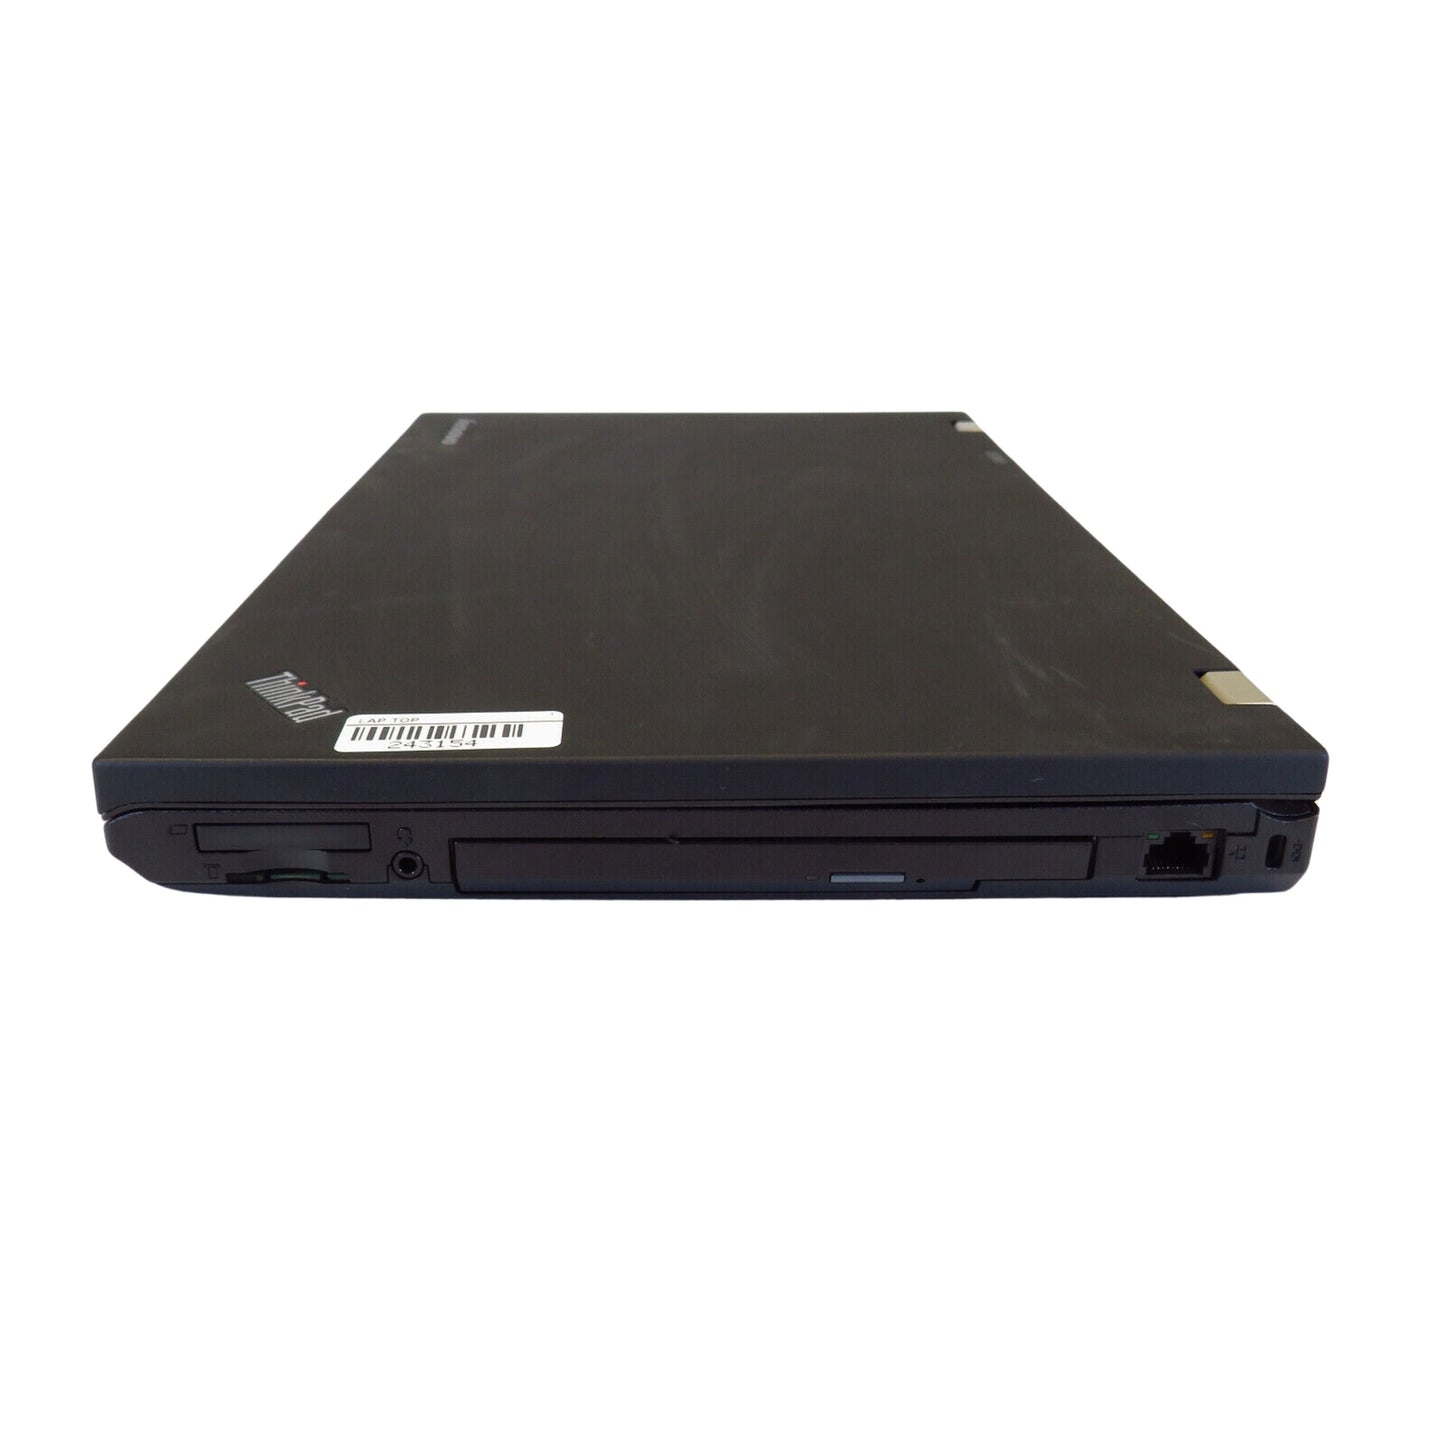 Lenovo Thinkpad T530 15.6" i7-3520M 2.9GHz 8GB RAM No HDD No Battery 2394-AG6 (Refurbished)